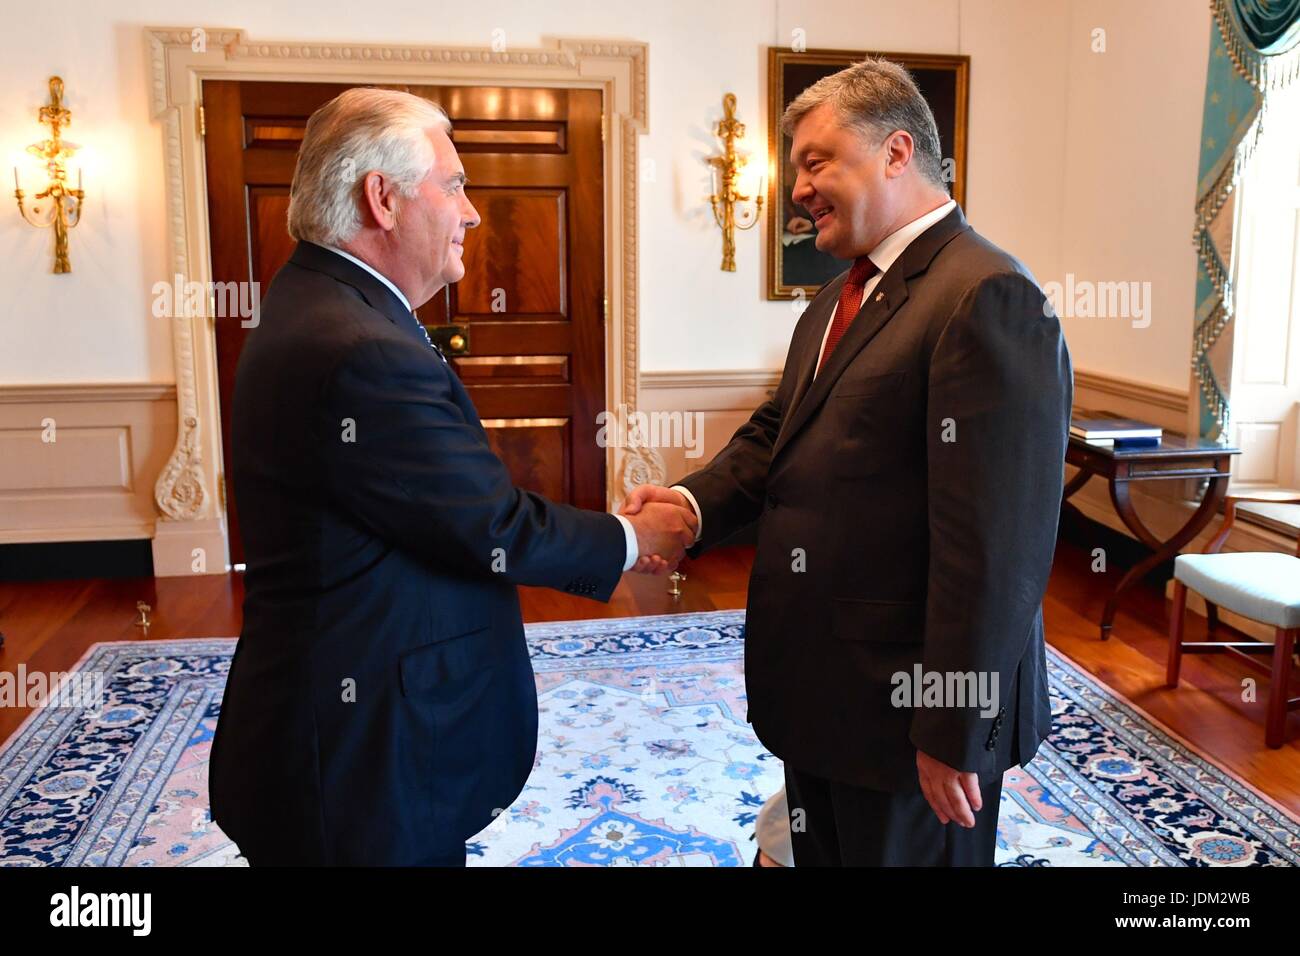 U.S. Secretary of State Rex Tillerson, left, welcomes Ukrainian President Petro Poroshenko prior to their bilateral meeting at the State Department June 20, 2017 in Washington, DC. Stock Photo